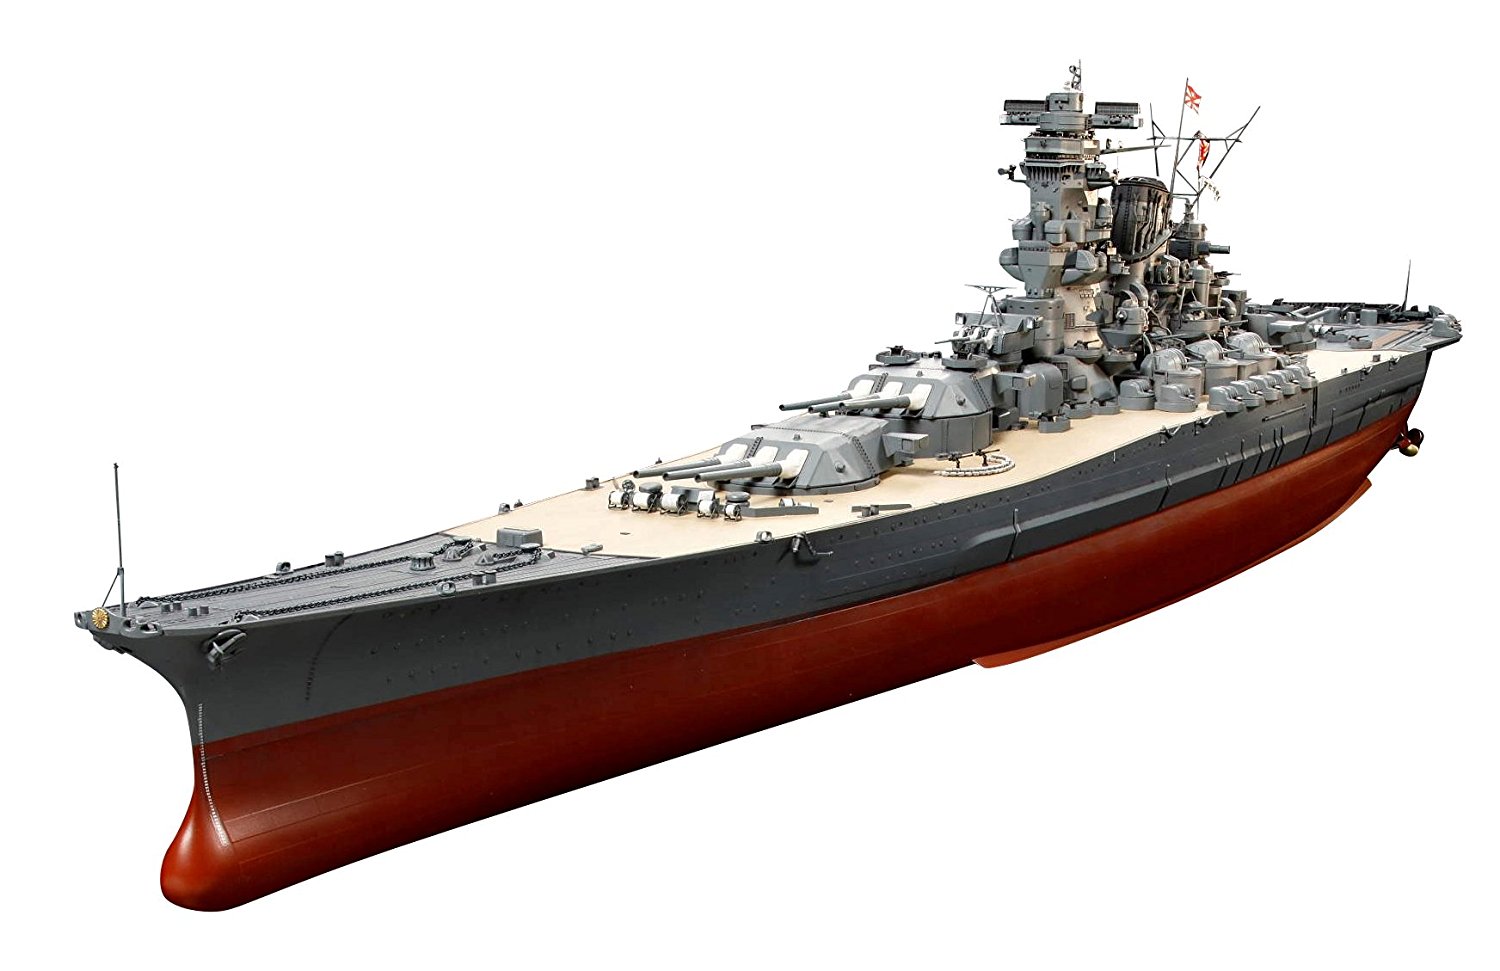 Japanese Battleship Yamato Backgrounds on Wallpapers Vista